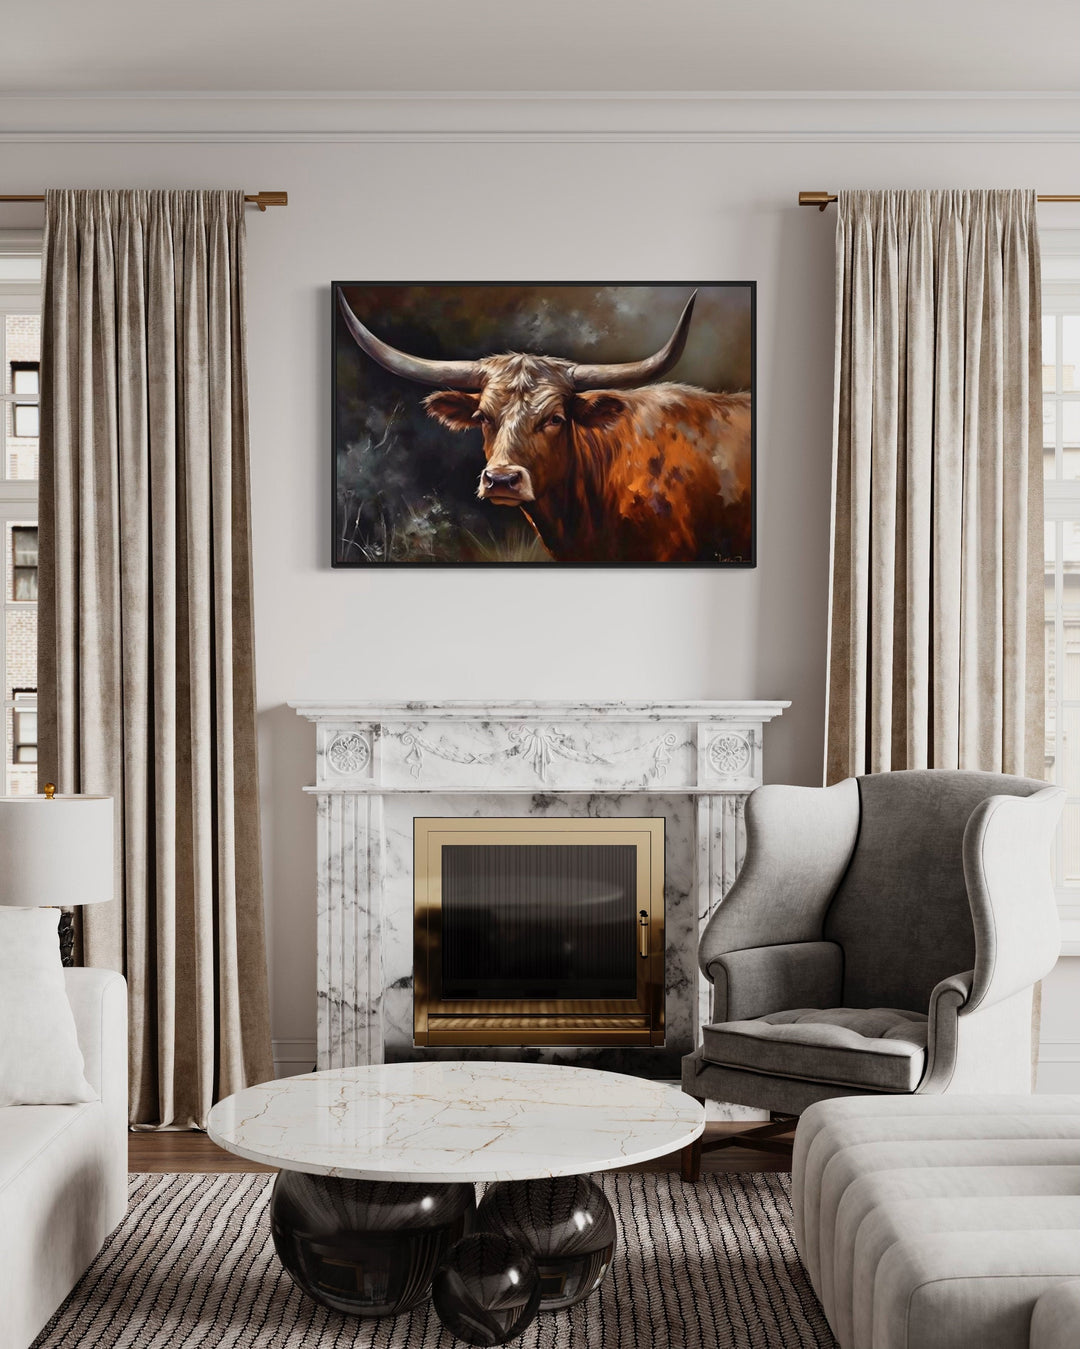 Texas Longhorn Cow Wall Art "Majestic Longhorn" over mantel